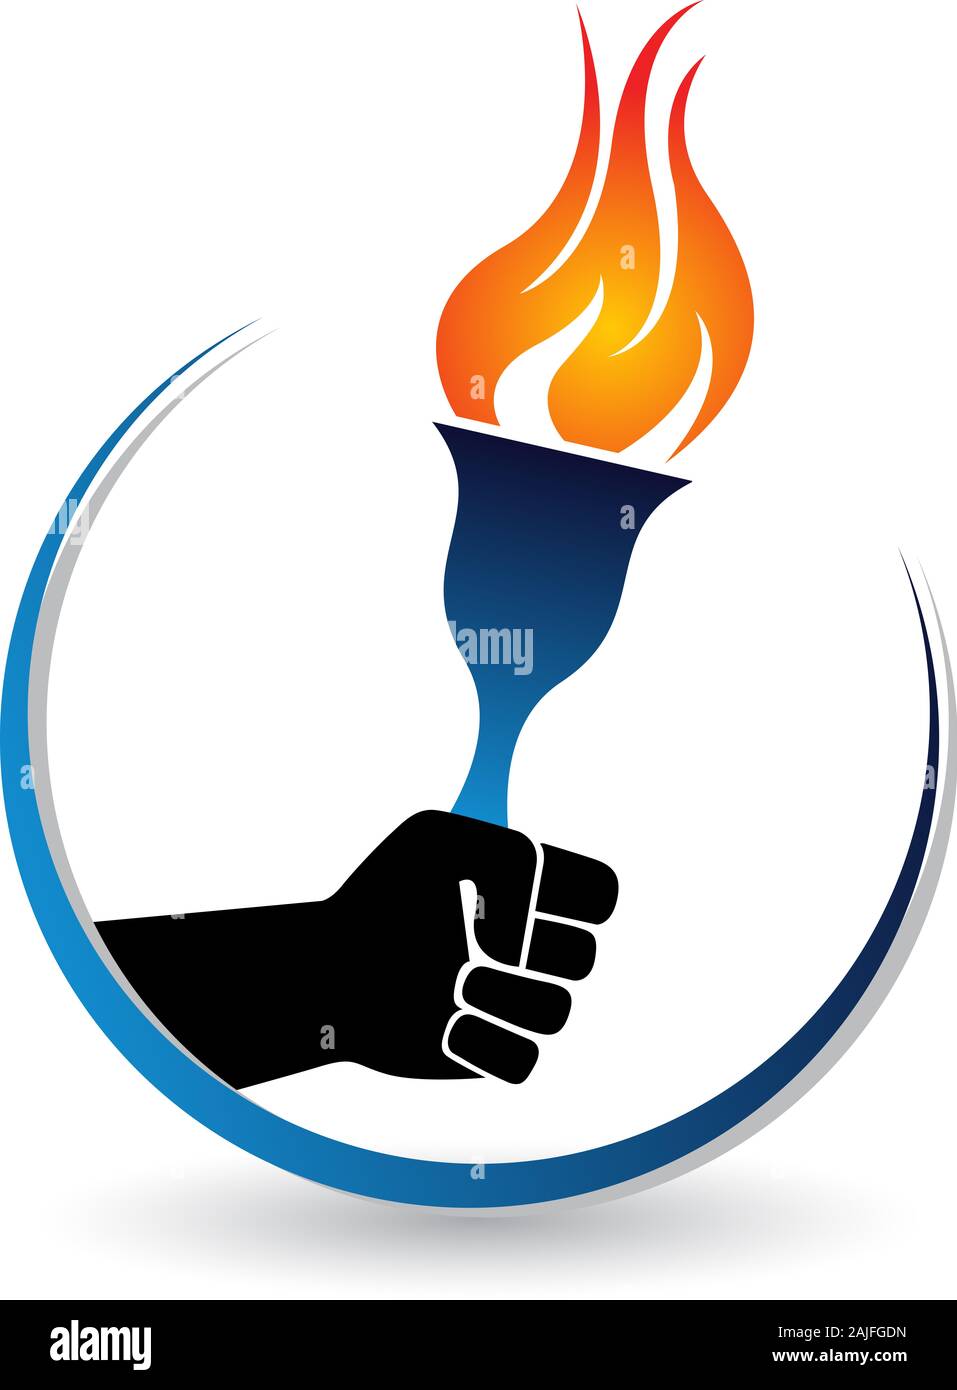 hand Olympic logo Stock Photo